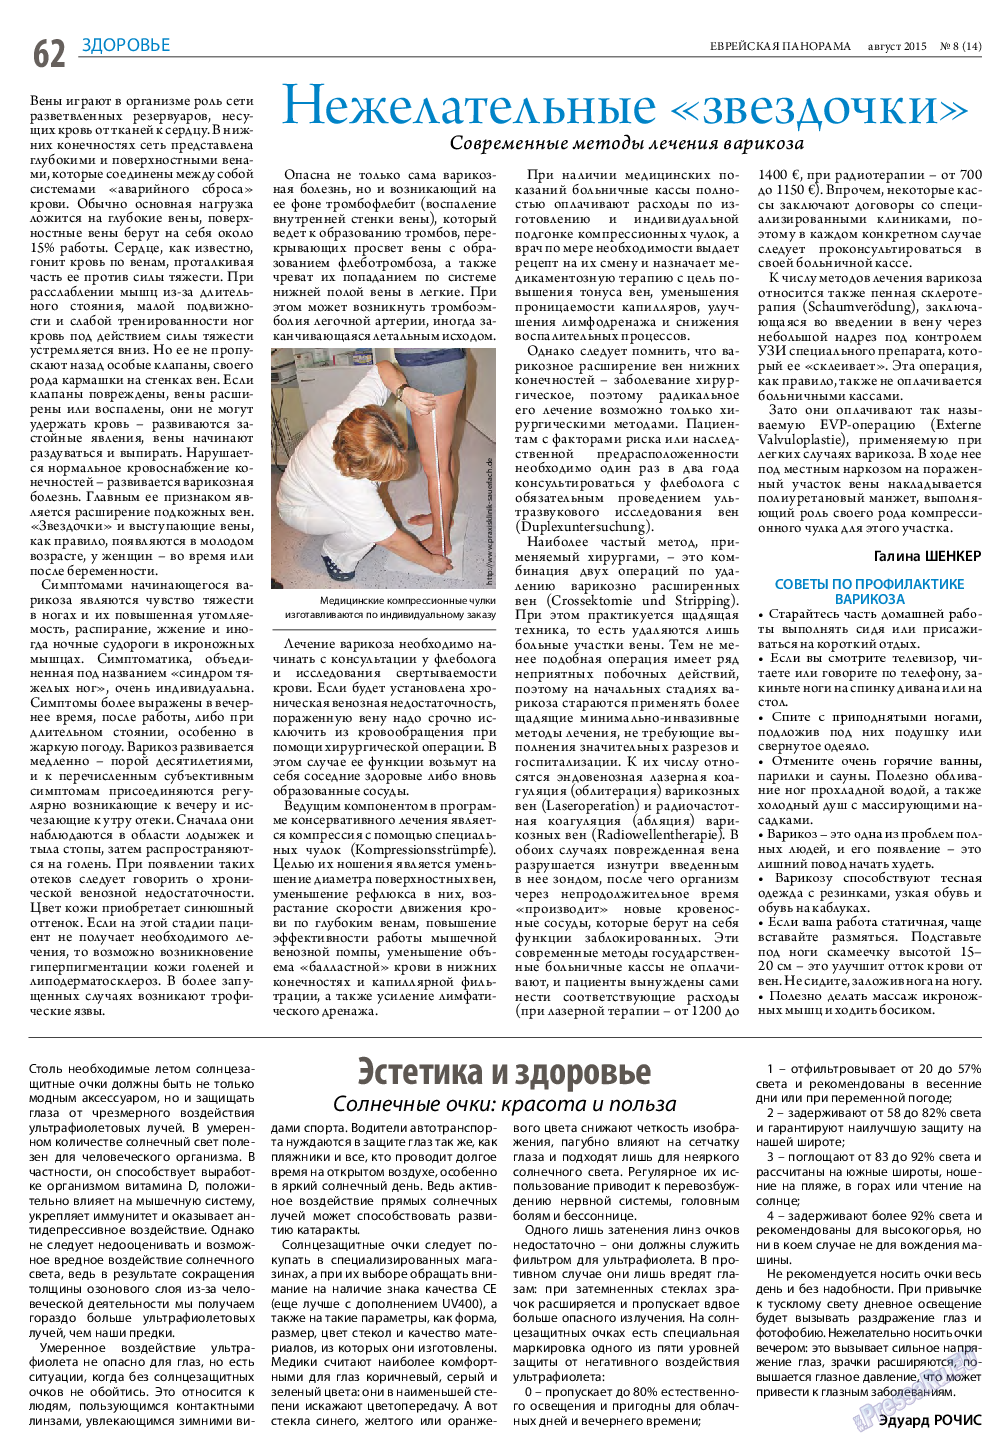 Еврейская панорама, газета. 2015 №8 стр.62